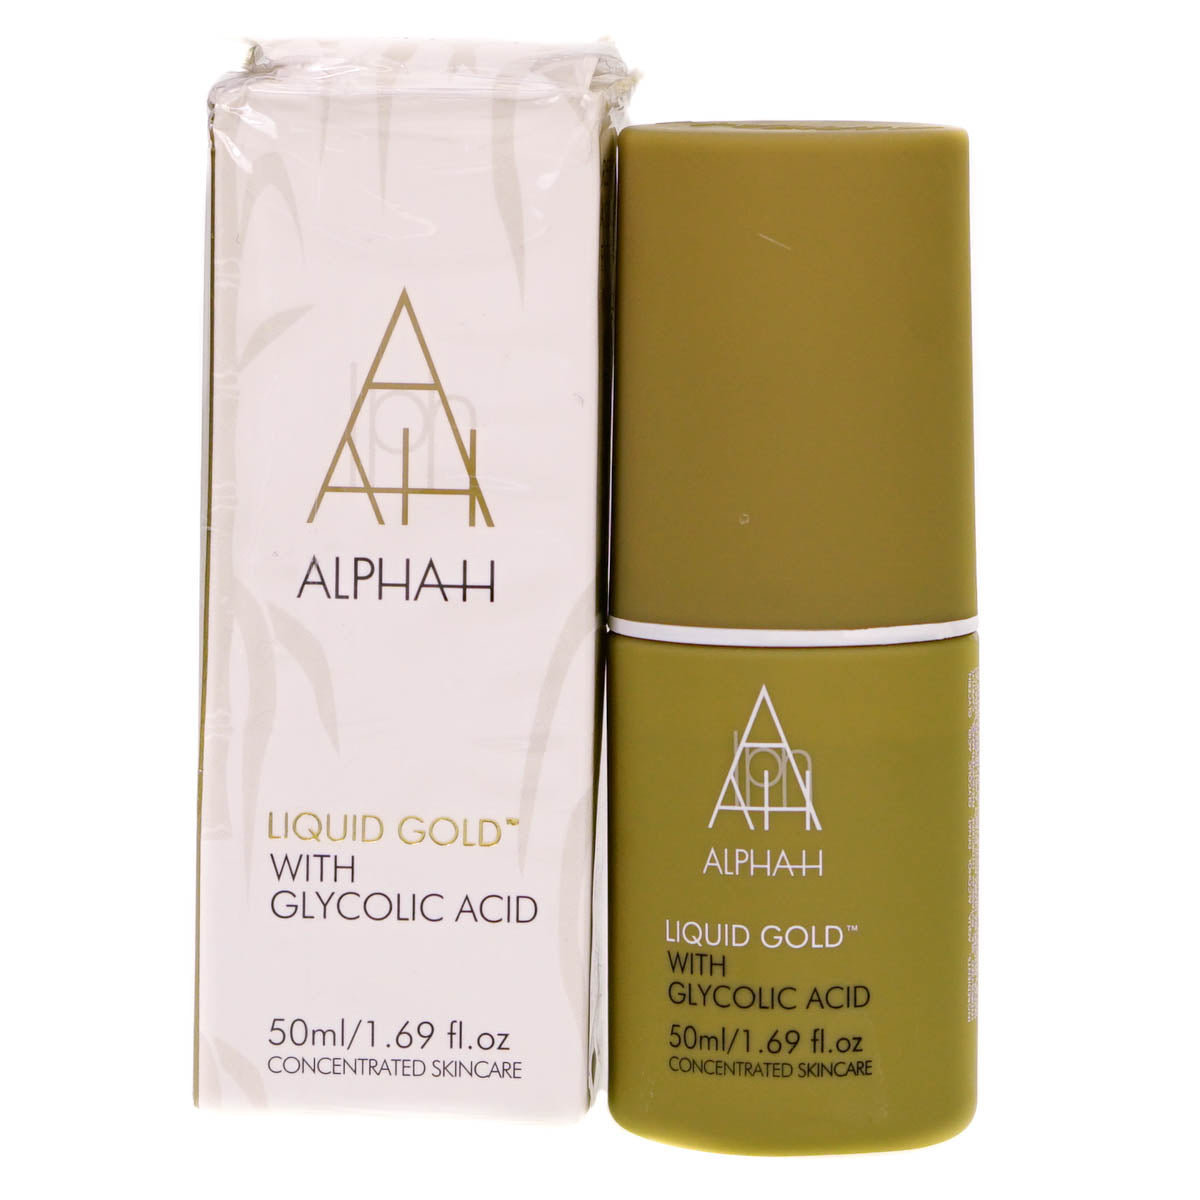 Alpha-H Liquid Gold with Glycolic Acid Serum 50ml | Damaged Box